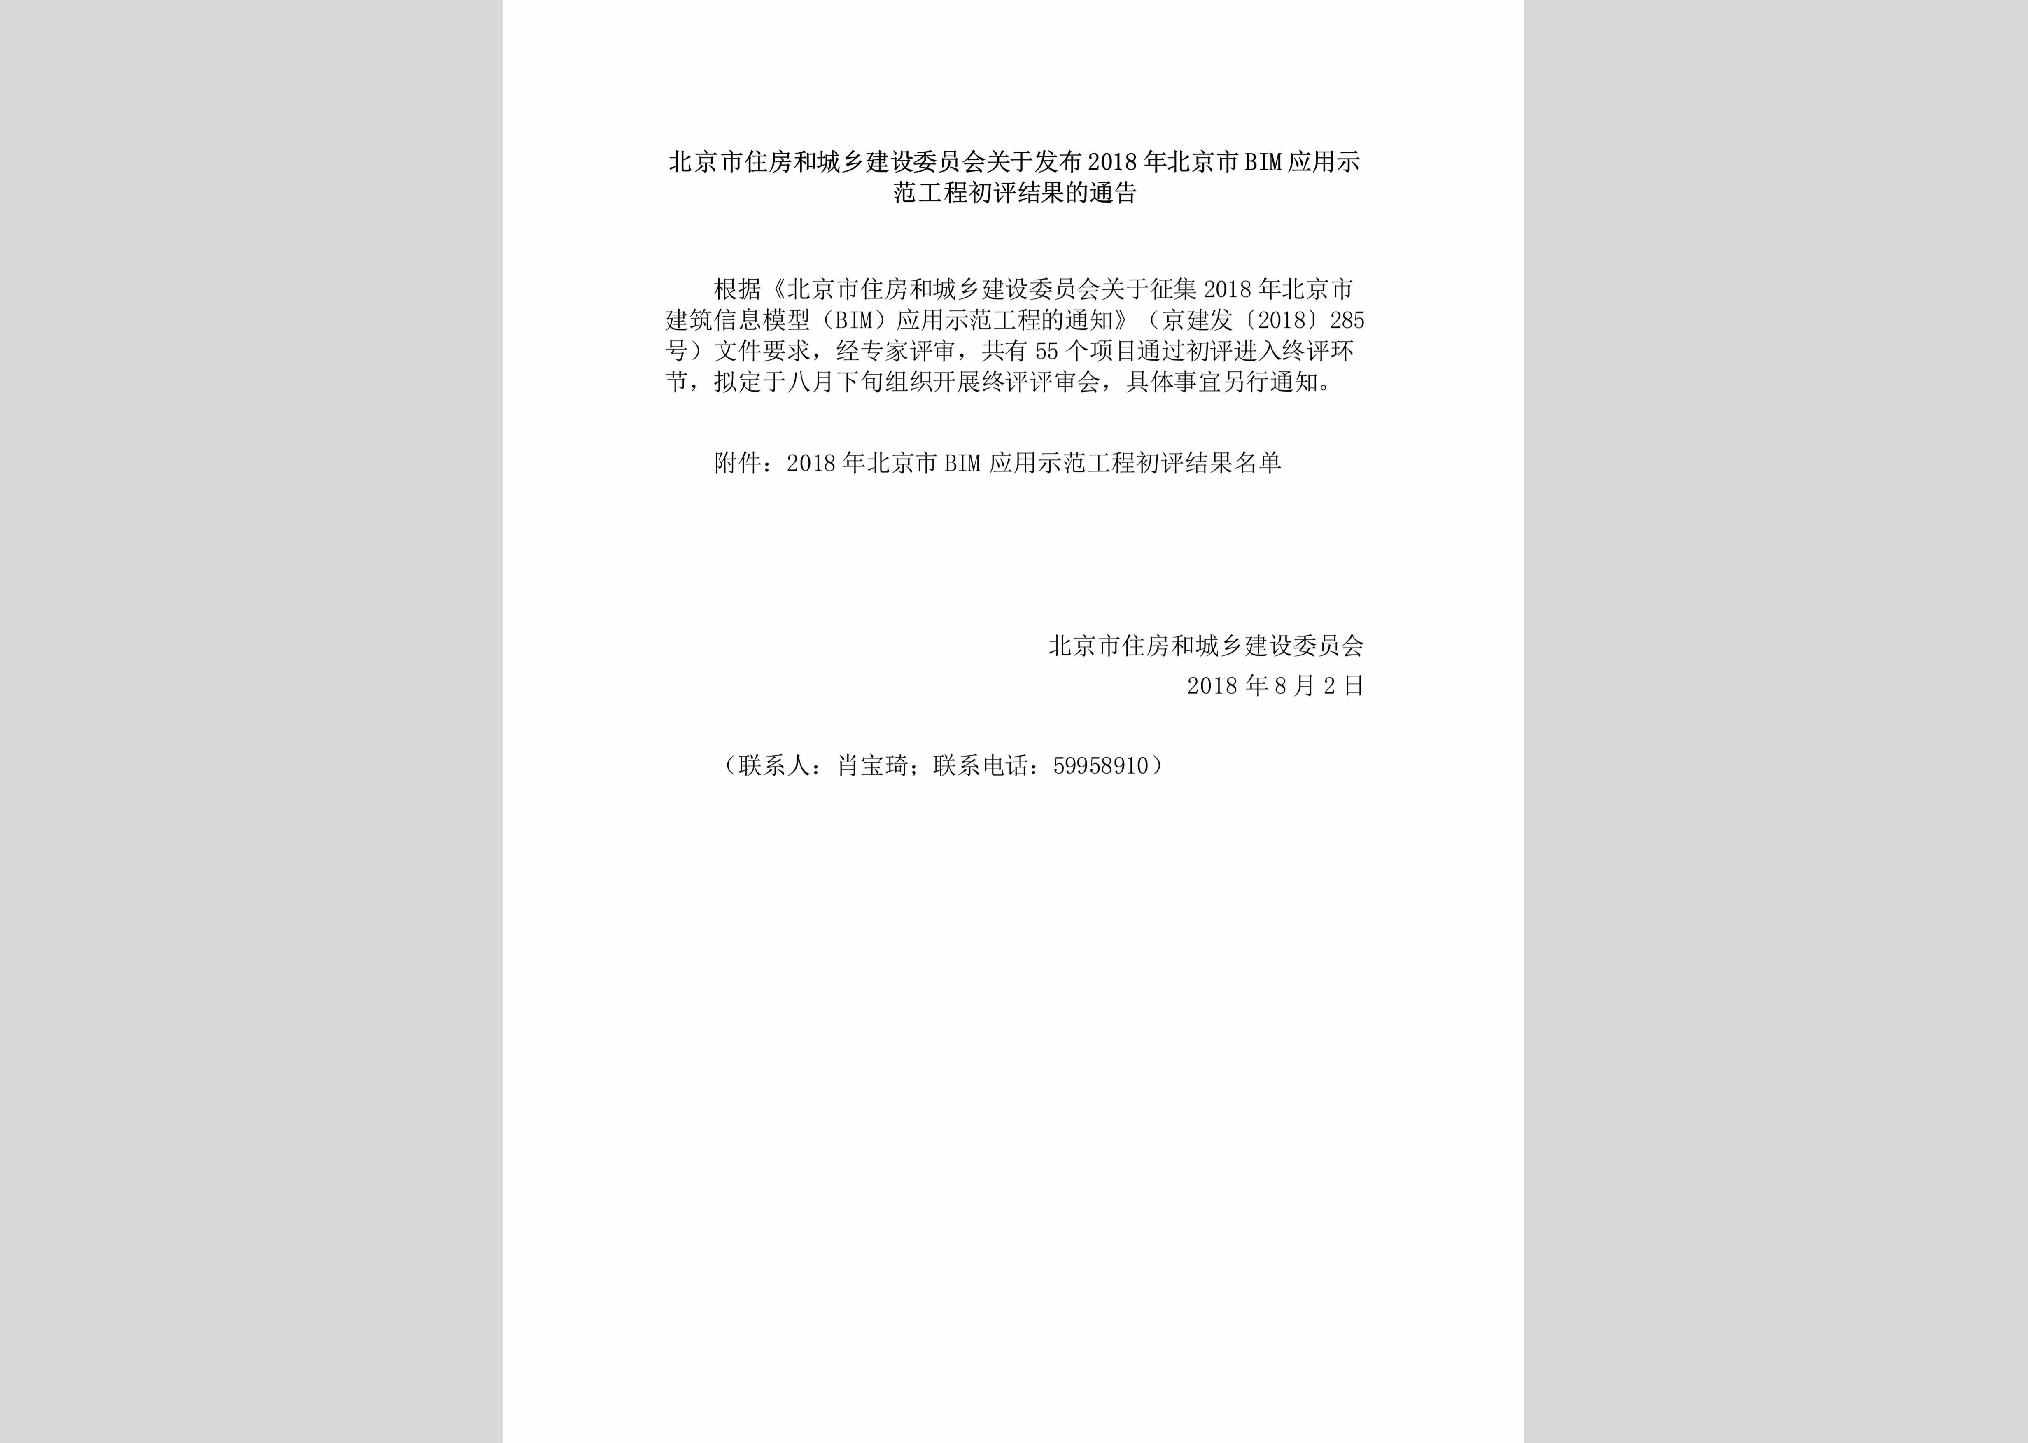 BJ-BIMYYSFG-2018：北京市住房和城乡建设委员会关于发布2018年北京市BIM应用示范工程初评结果的通告